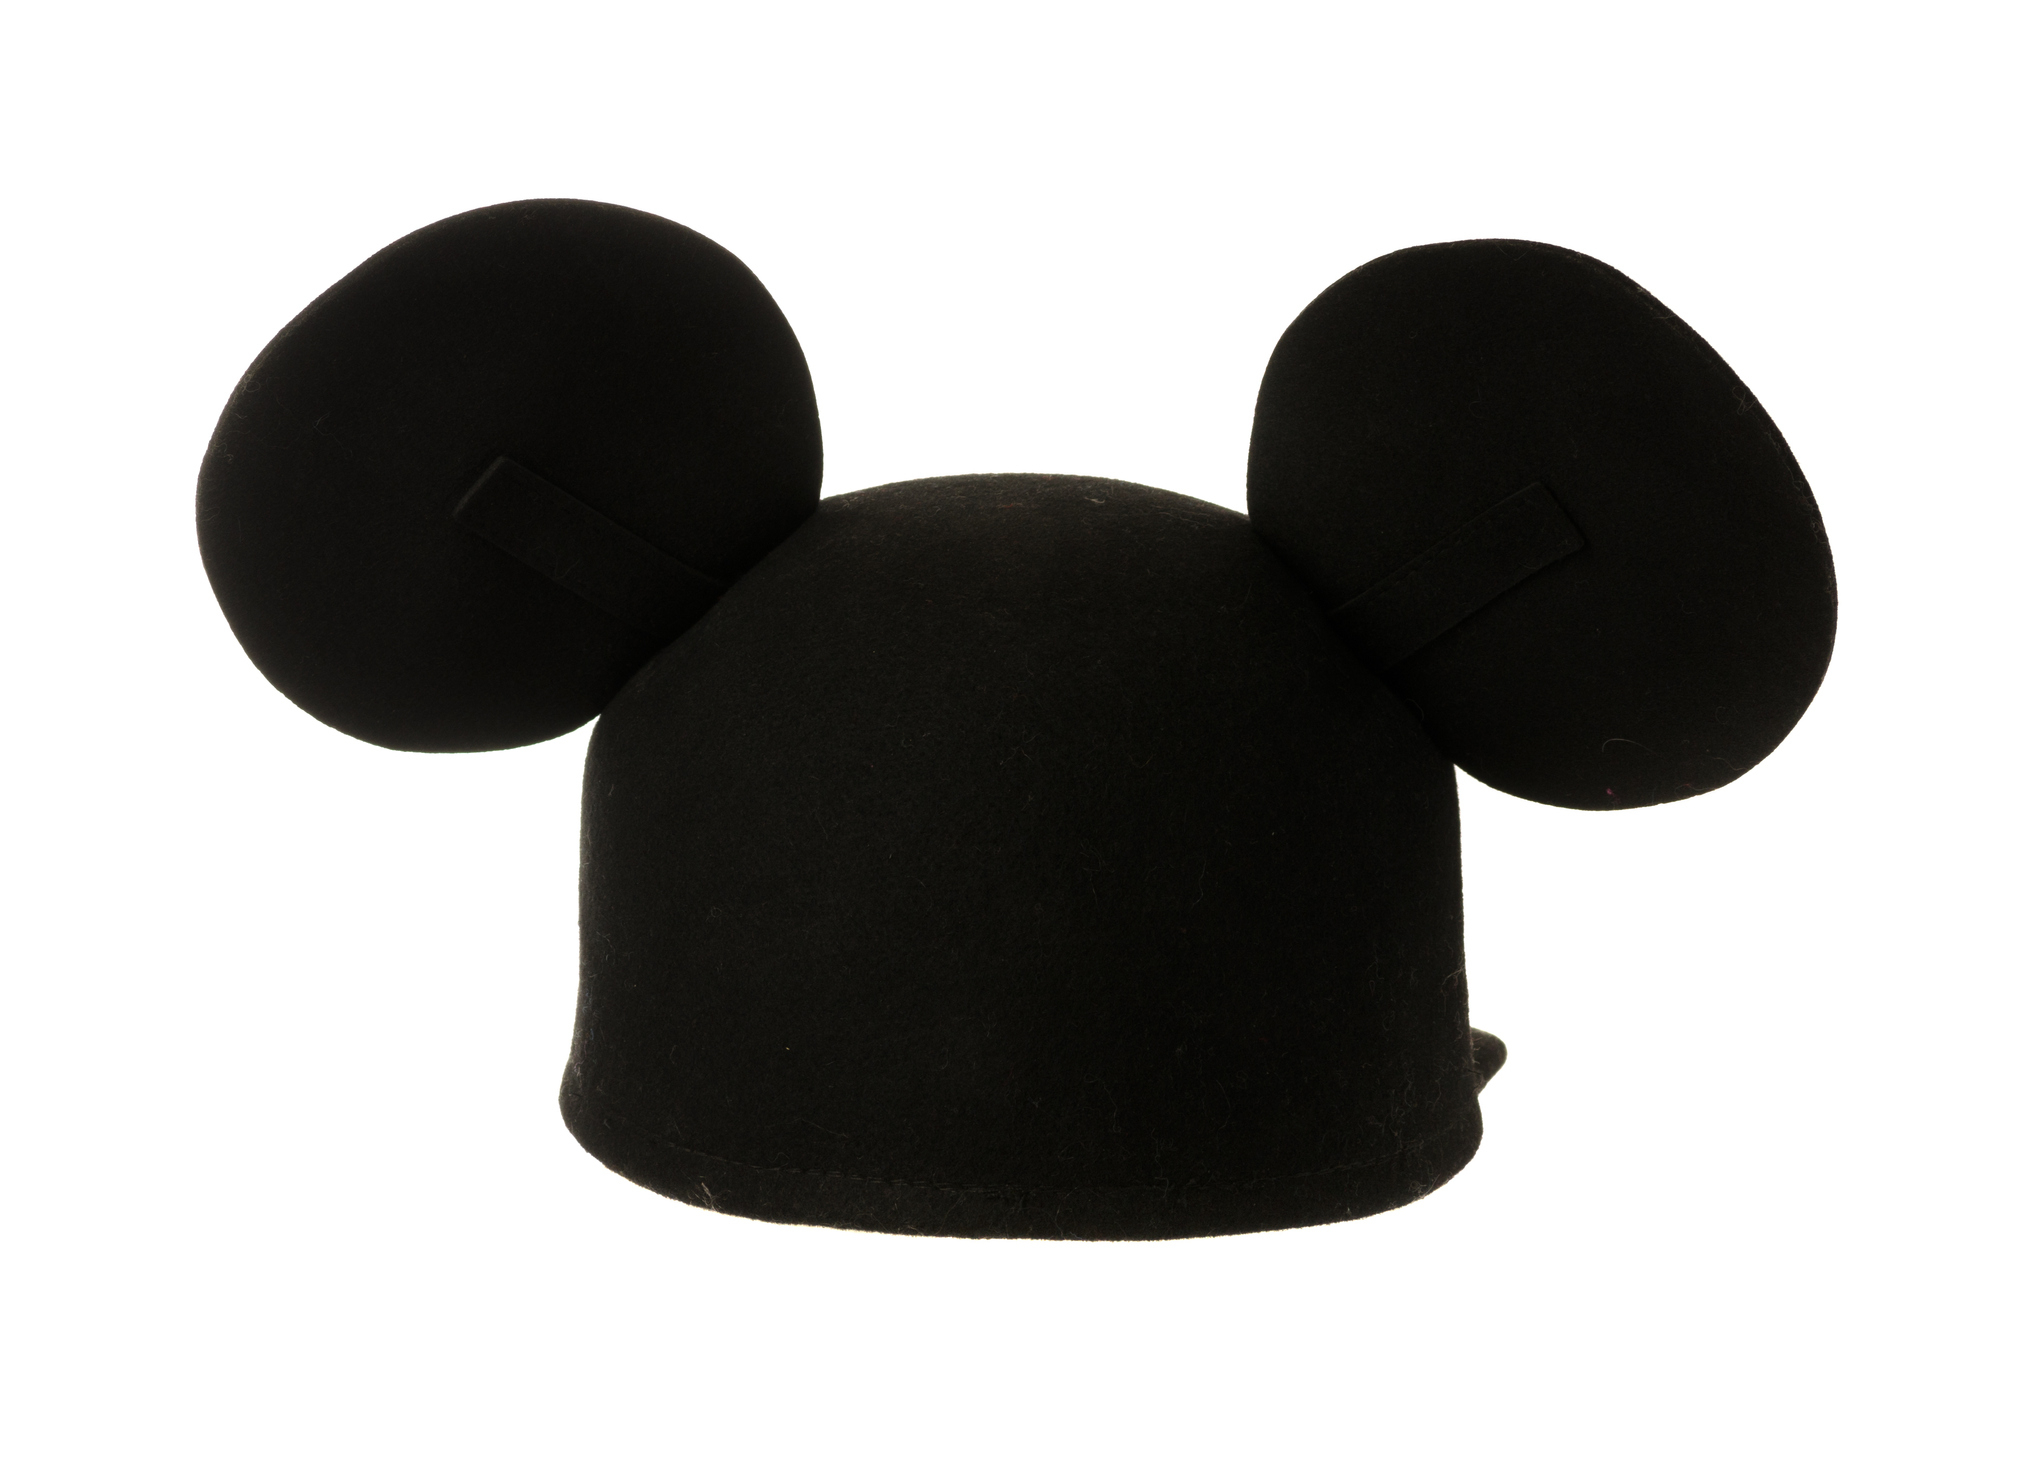 A Disney hat